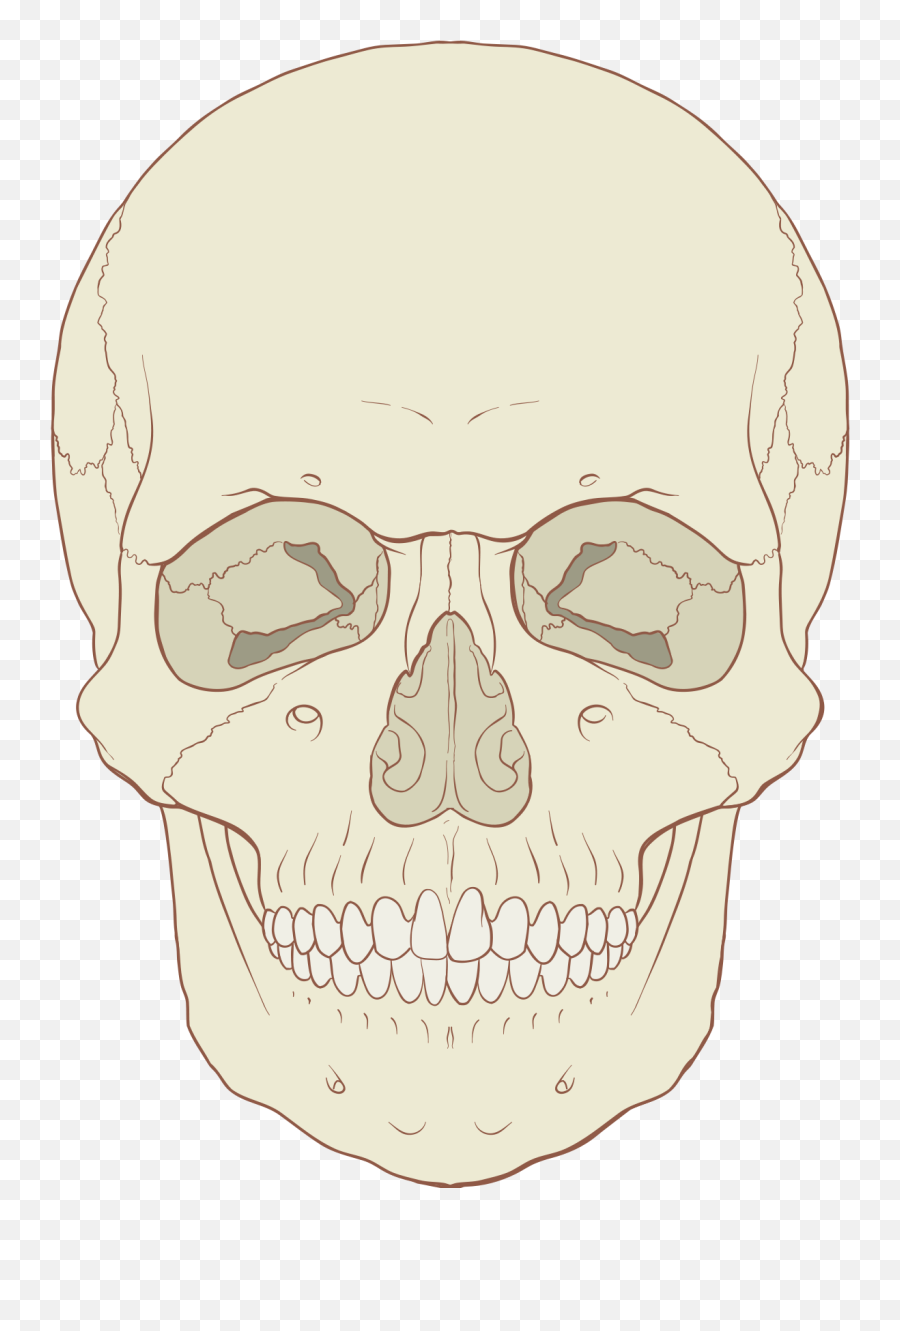 Fileskull Human Anterior Viewsvg - Wikipedia Anterior View Of Human Skull Png,Human Skull Png